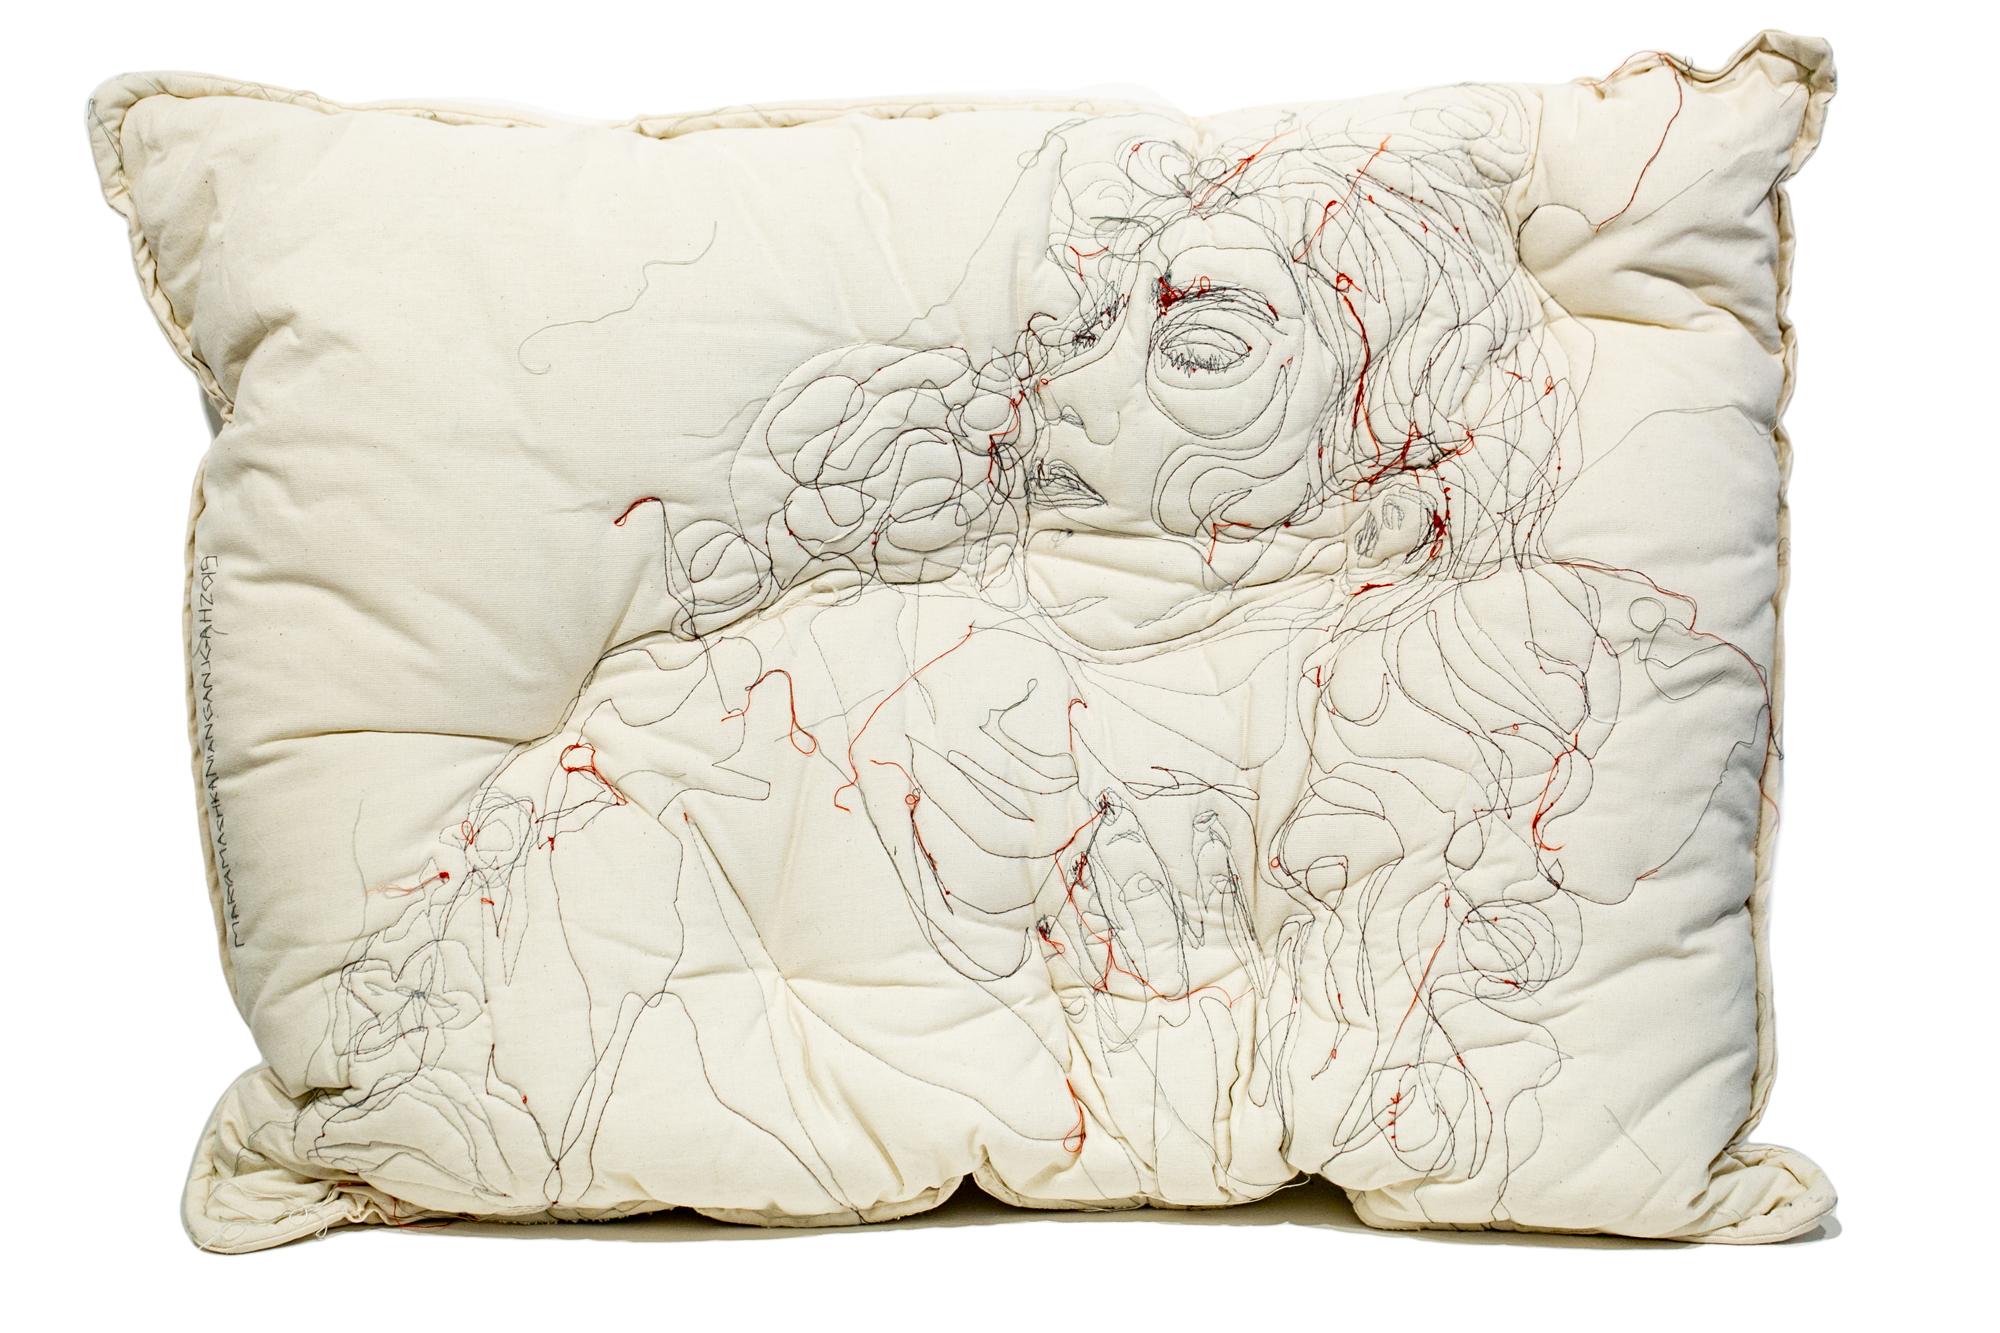 Maryam Ashkanian Figurative Sculpture - "Sleep Series III", Embroidered Figurative Pillow, Wall-Hanging Sculpture 